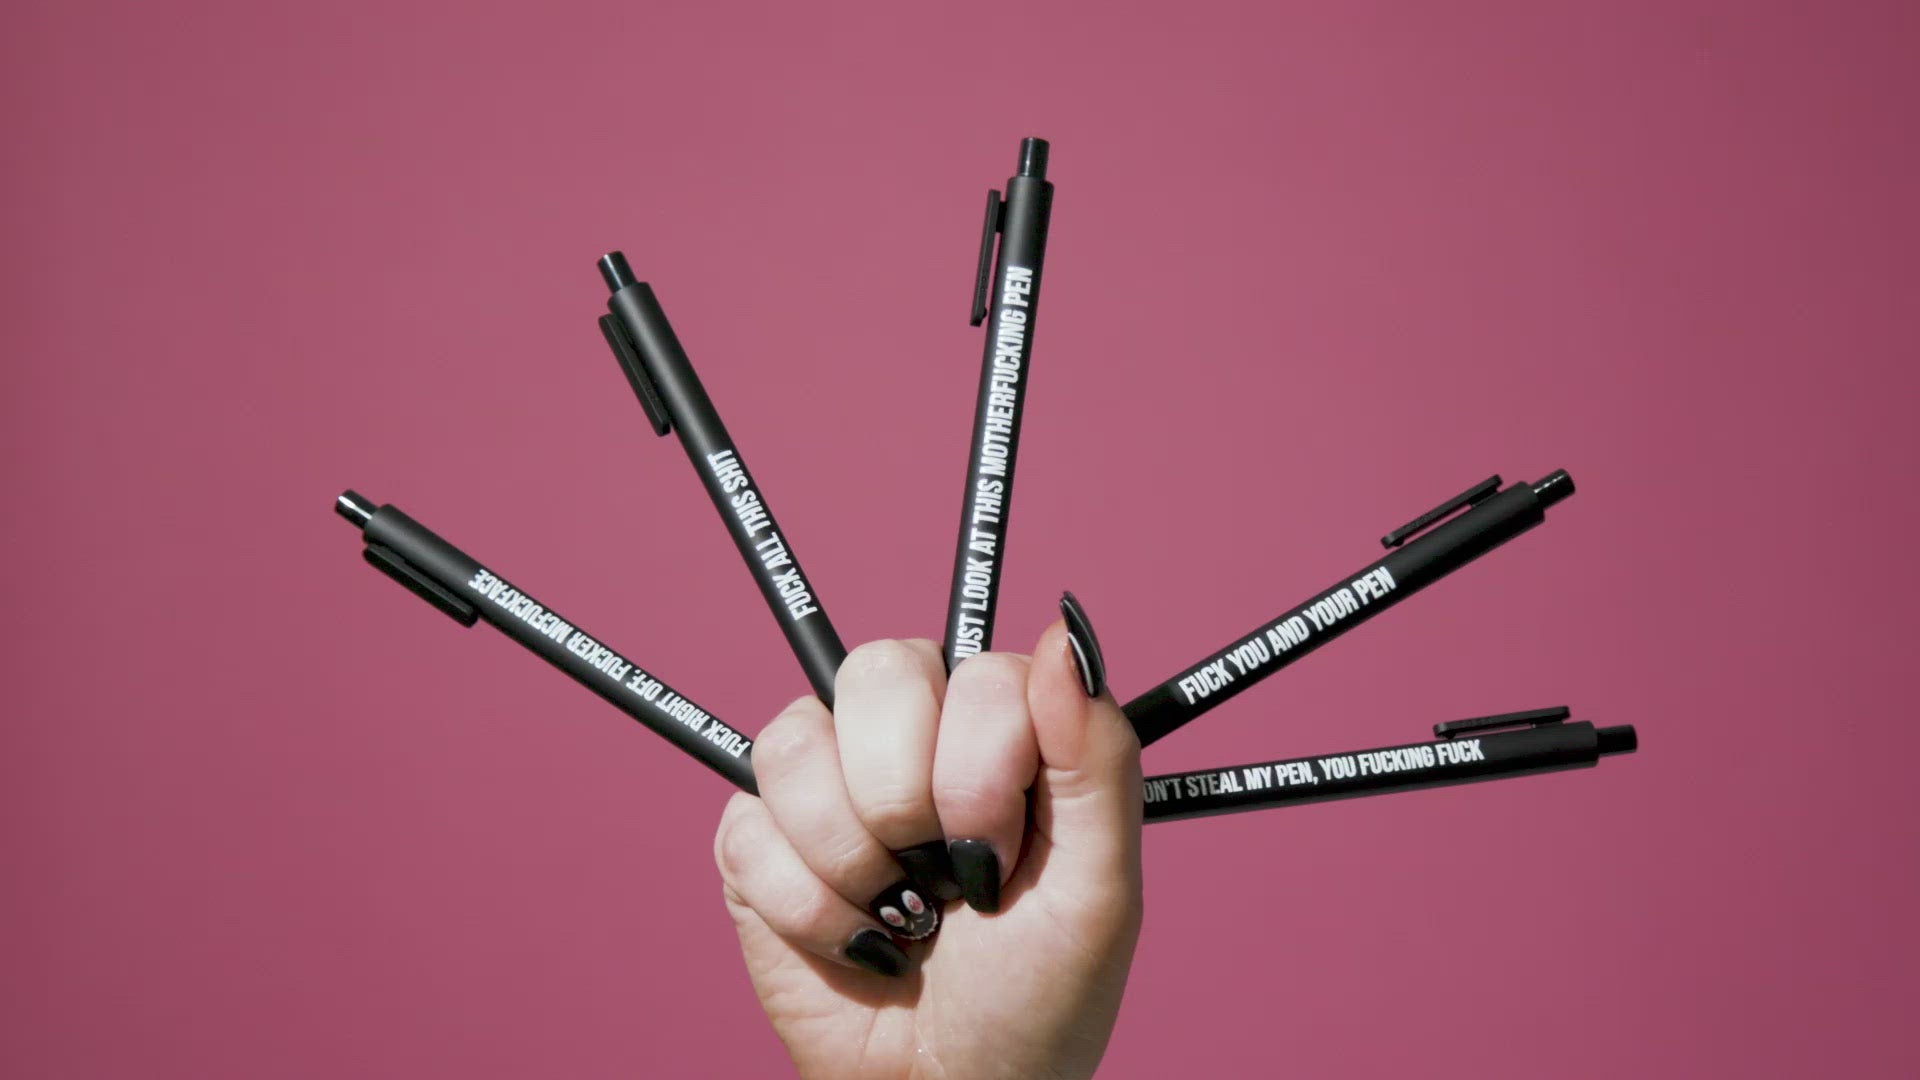 Sweary Fuck Pens Cussing Pen Gift Set - 5 Black Gel Pens Rife with Profanity by The Bullish Store